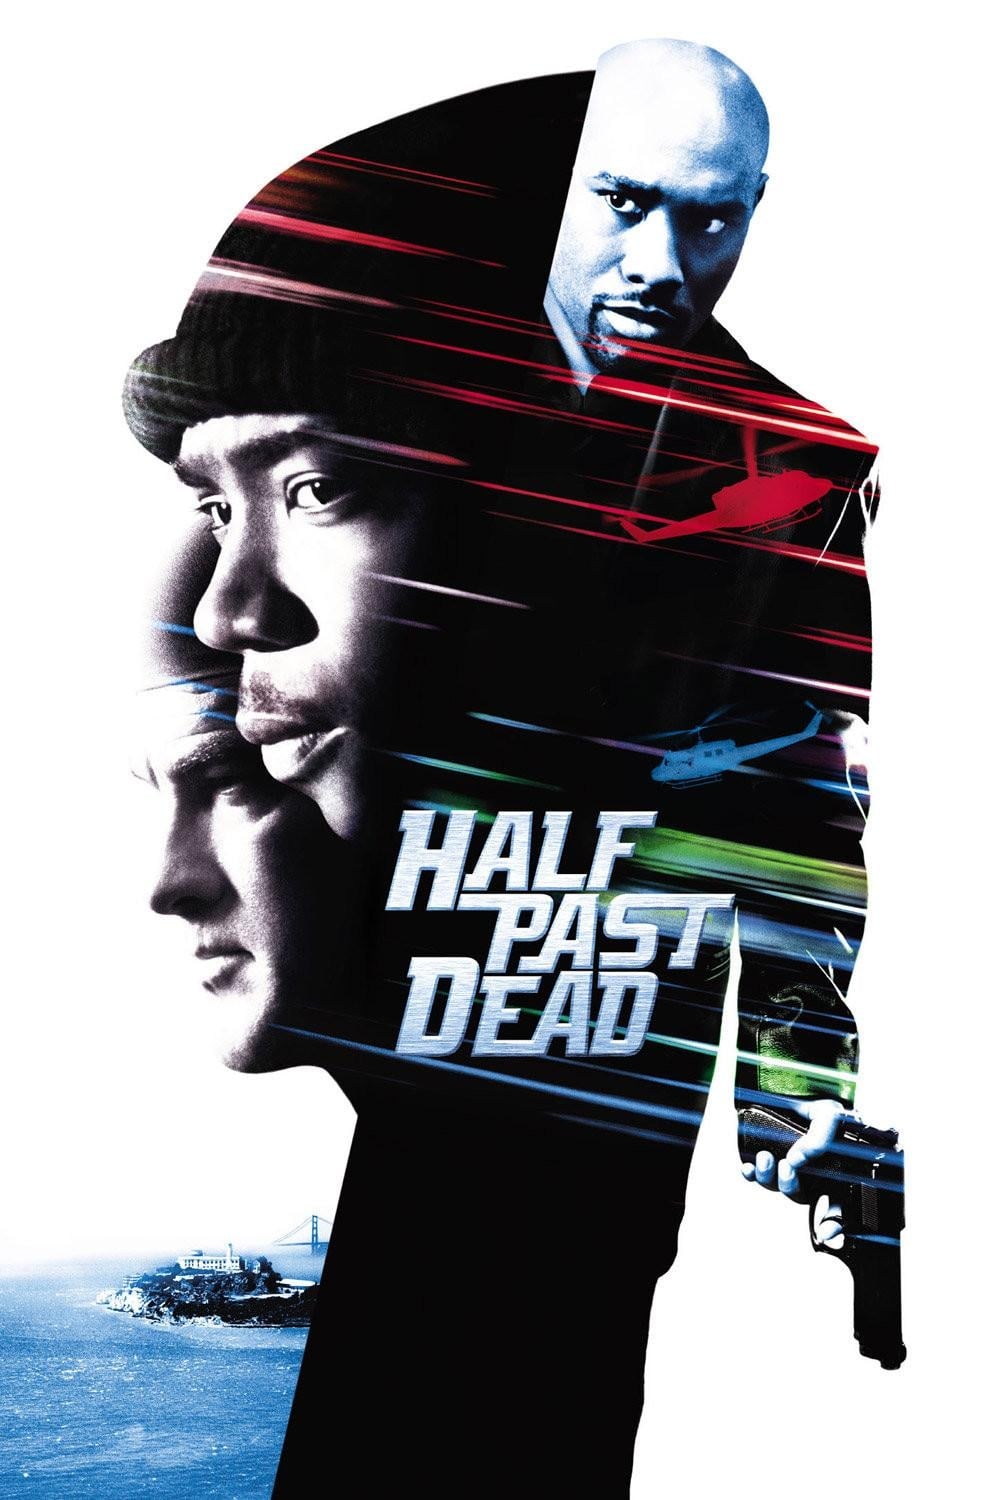 Bão Táp Nhà Giam (Half Past Dead) [2002]